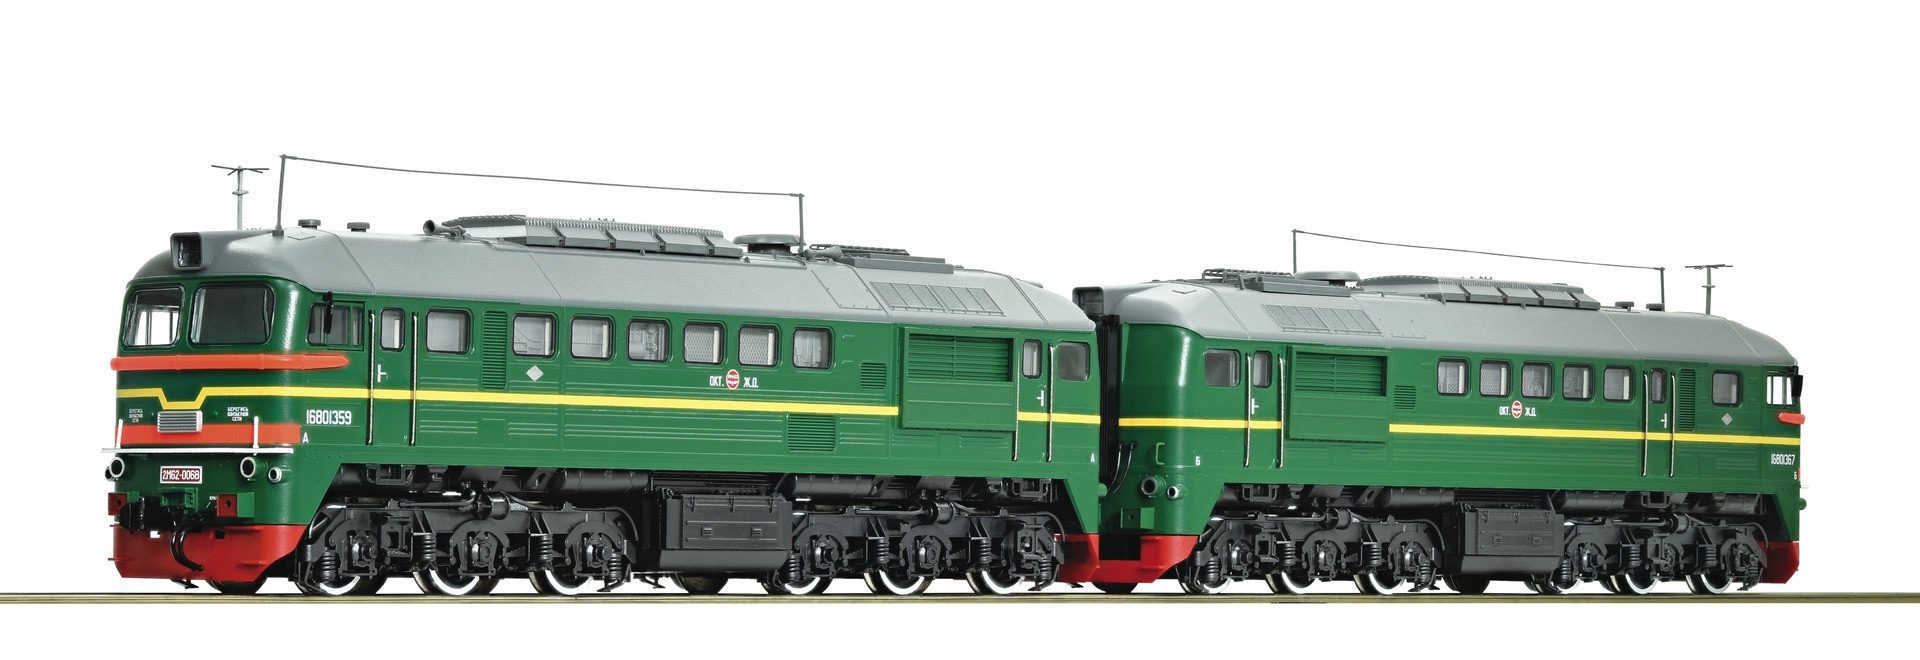 Trains miniatures : locomotives et autorail - Diesel locomotive M62, R